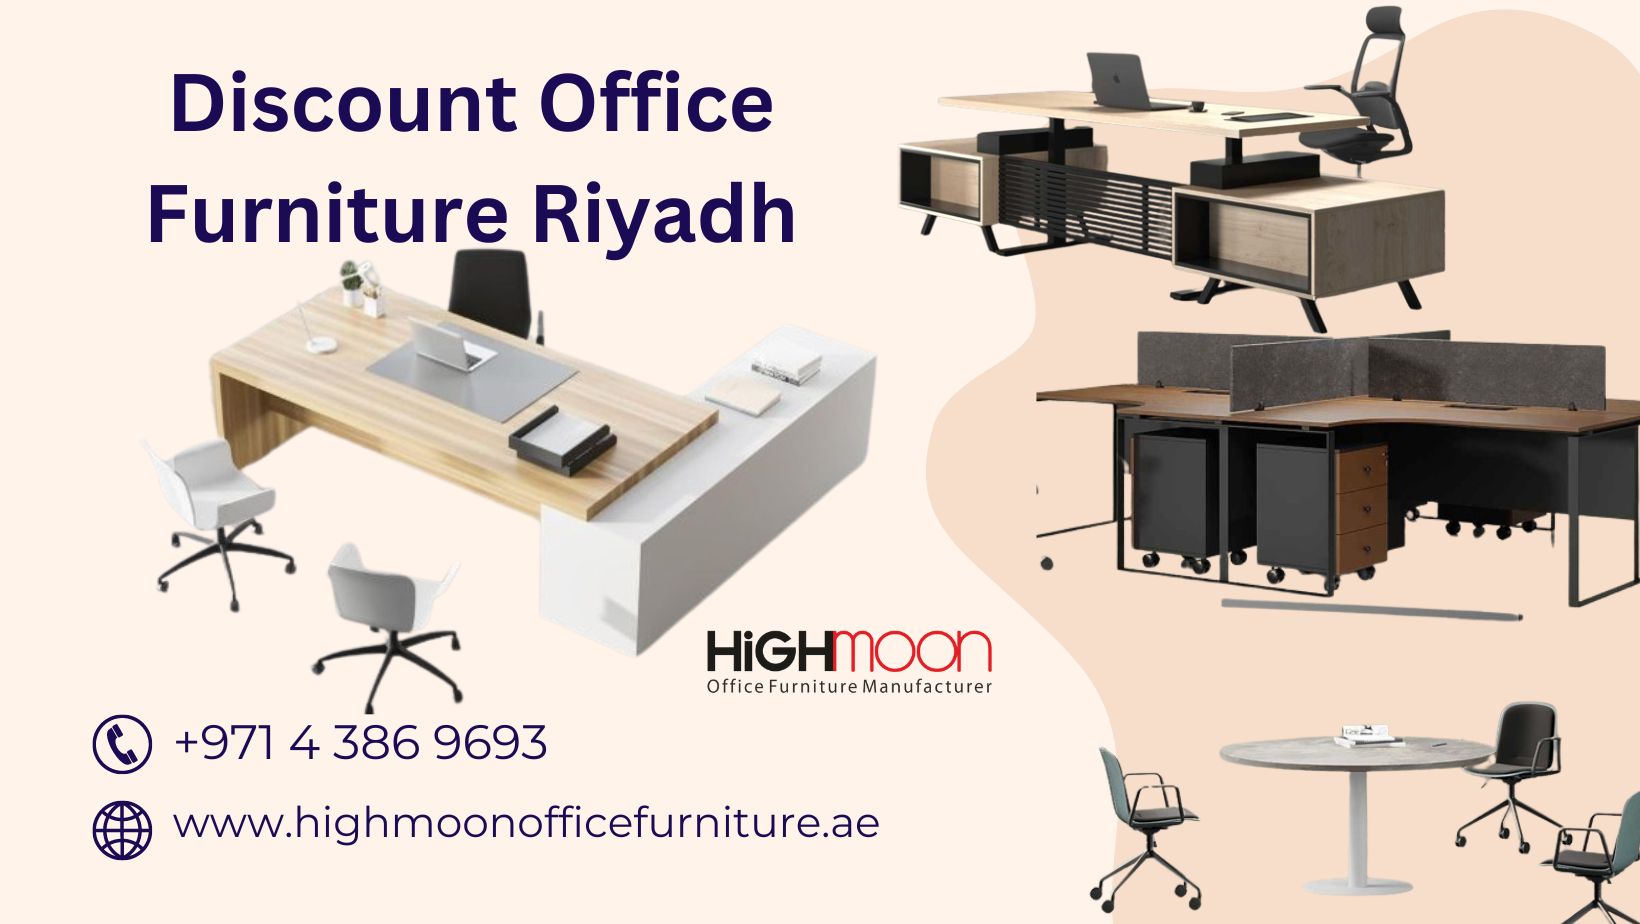 Discount Office Furniture Riyadh